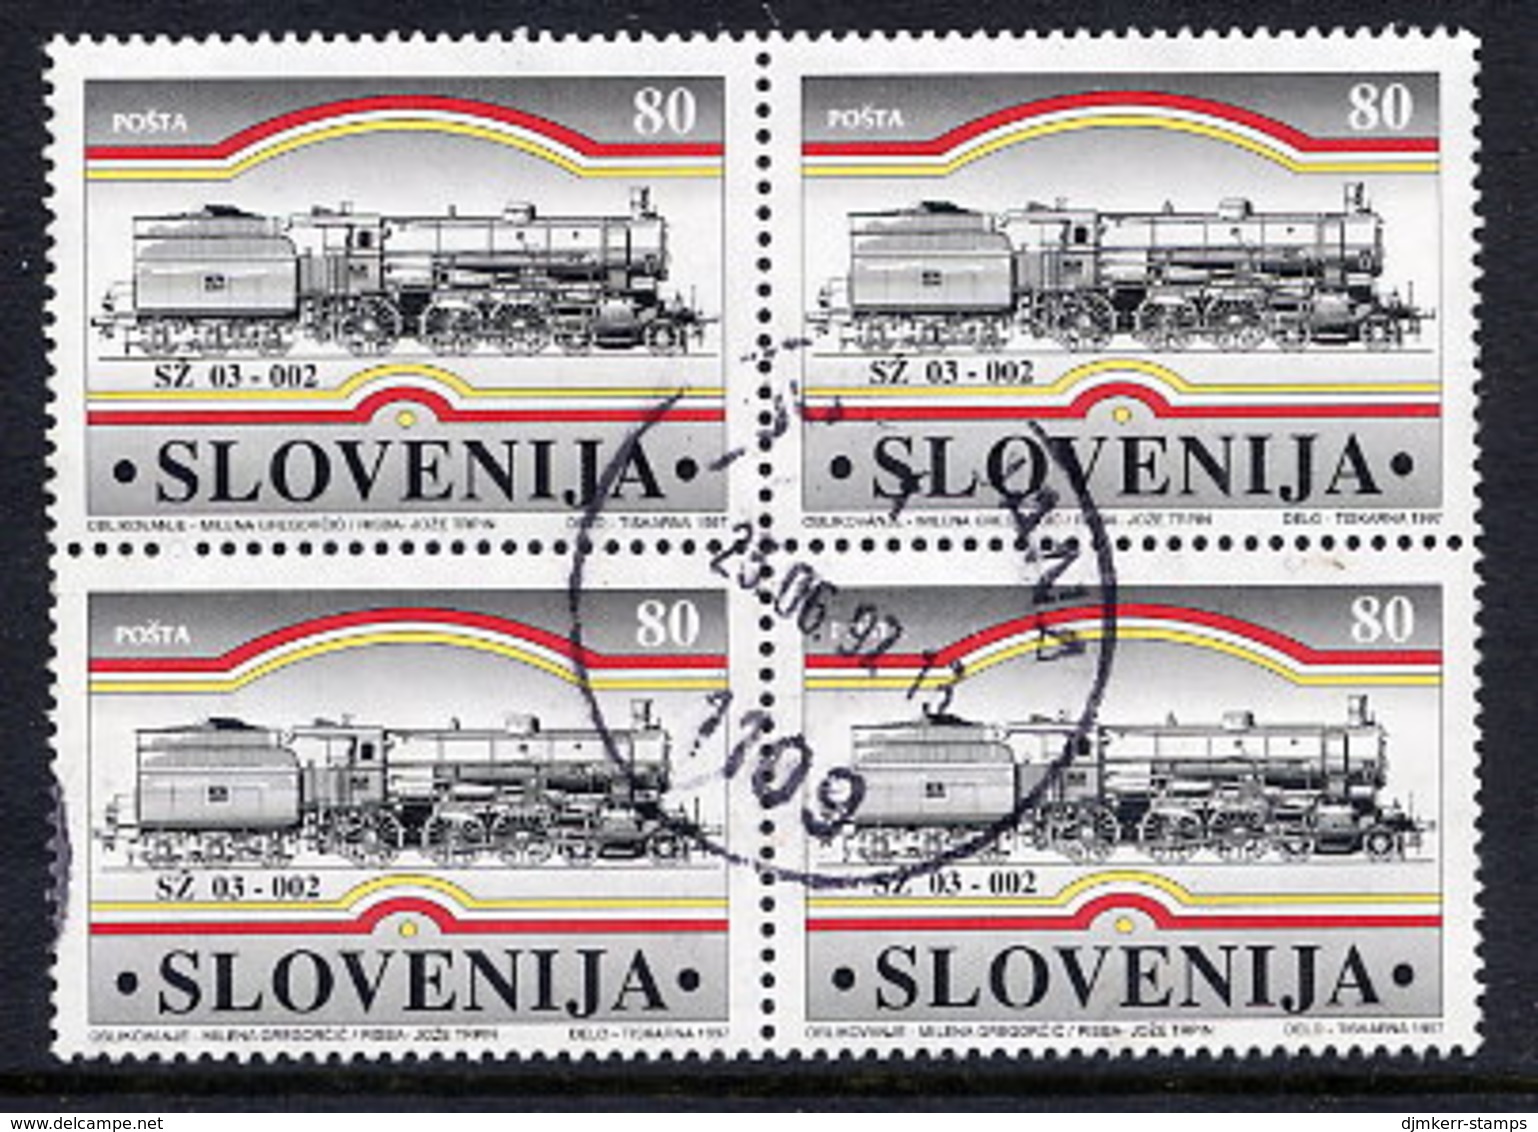 SLOVENIA 1997 Trieste Railway  Used Block Of 4.  Michel 188 - Slowenien